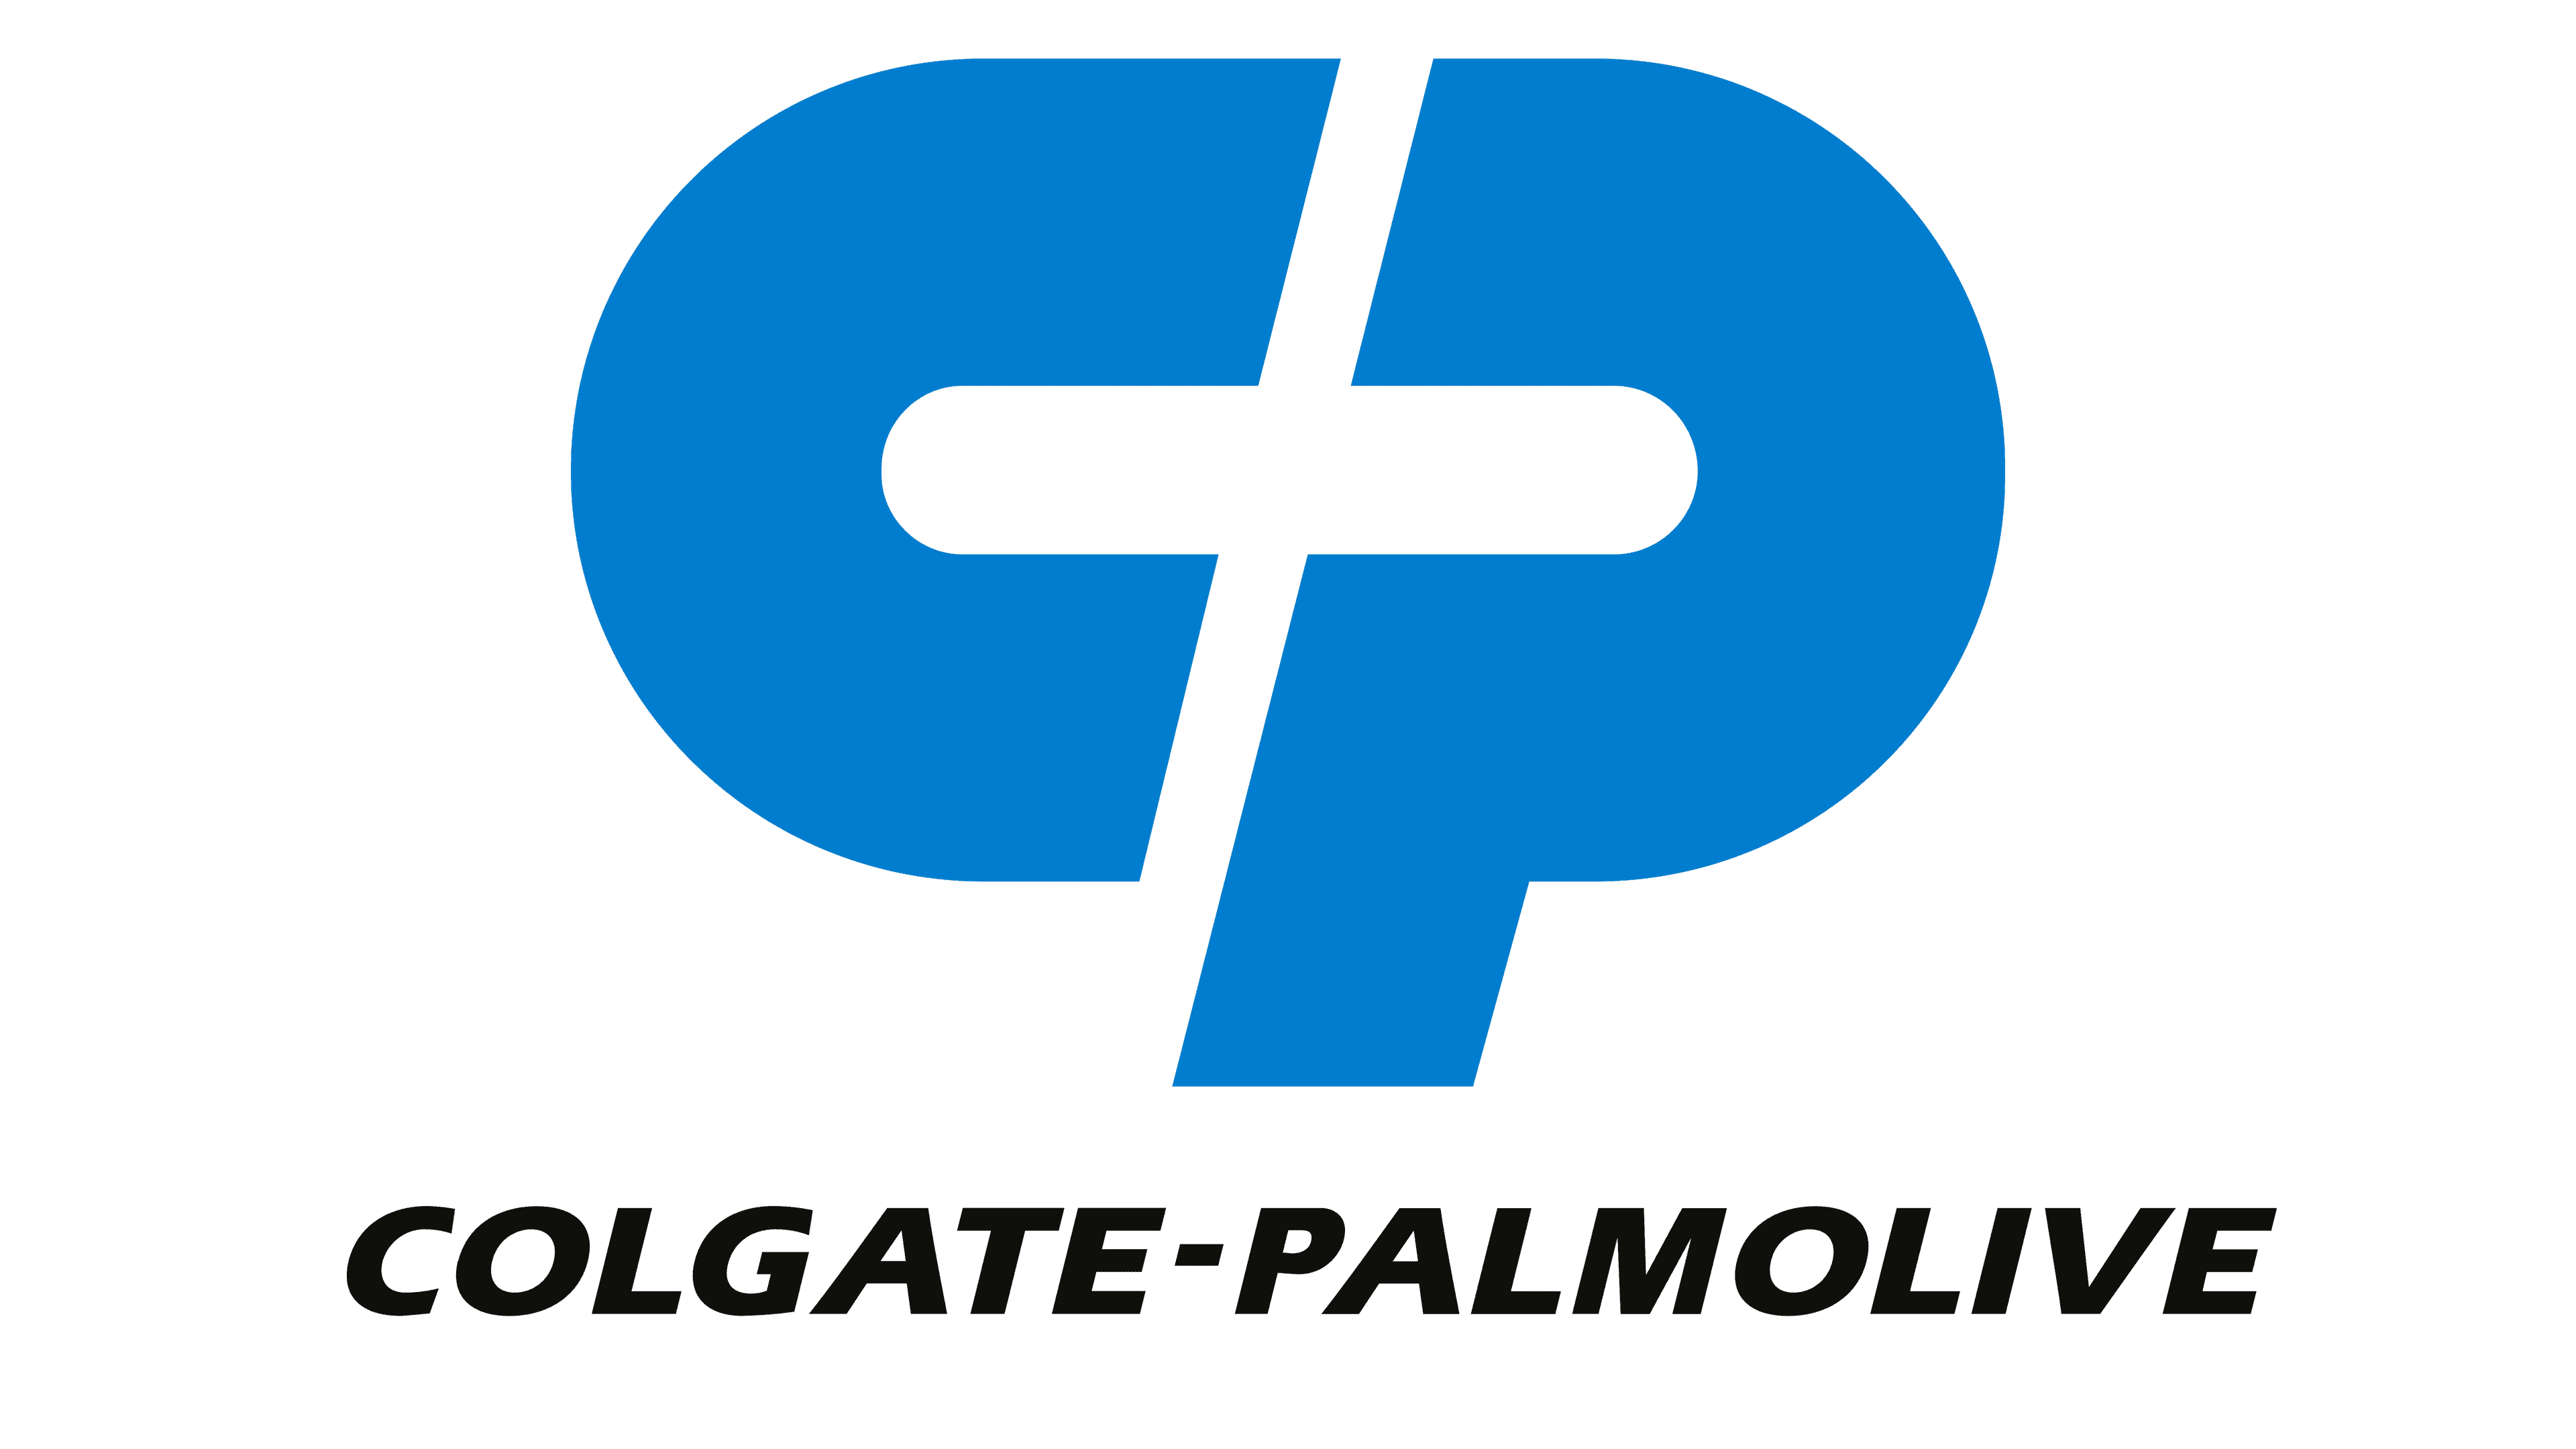 colgate-palmolive-logo1